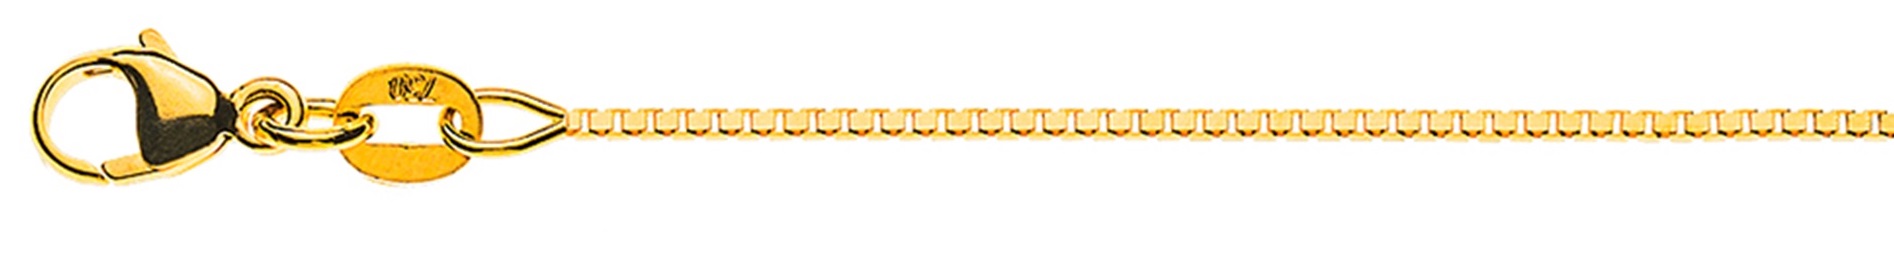 AURONOS Élégance Halskette Gelbgold 14K Venezianerkette diamantiert 45cm 0.9mm